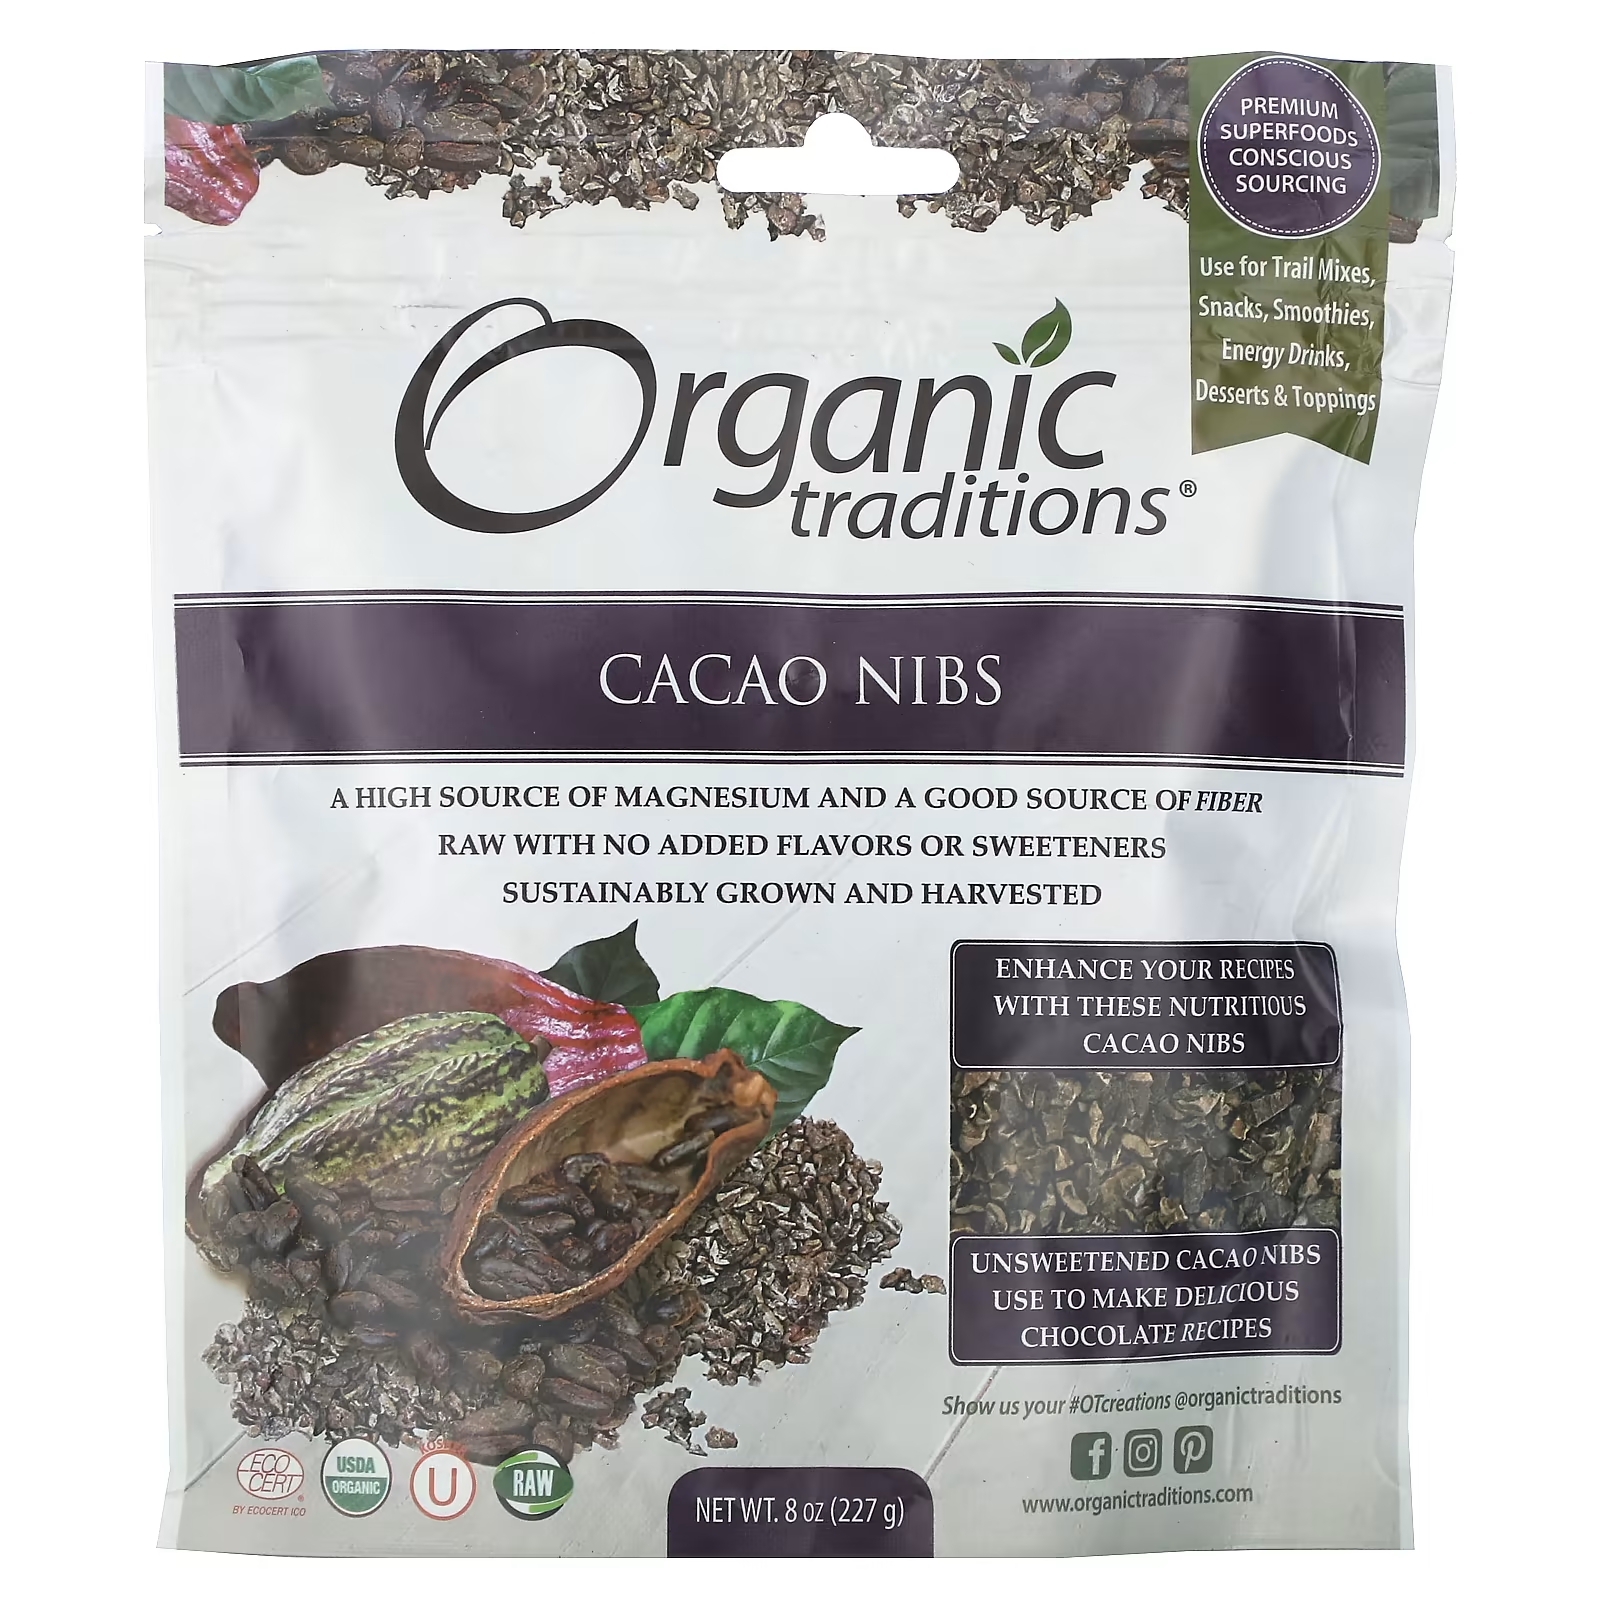 Суперфуды Organic Traditions Cacao Nbs, 227 г organic traditions сахар с кокосовой пальмой 227 г 8 унций